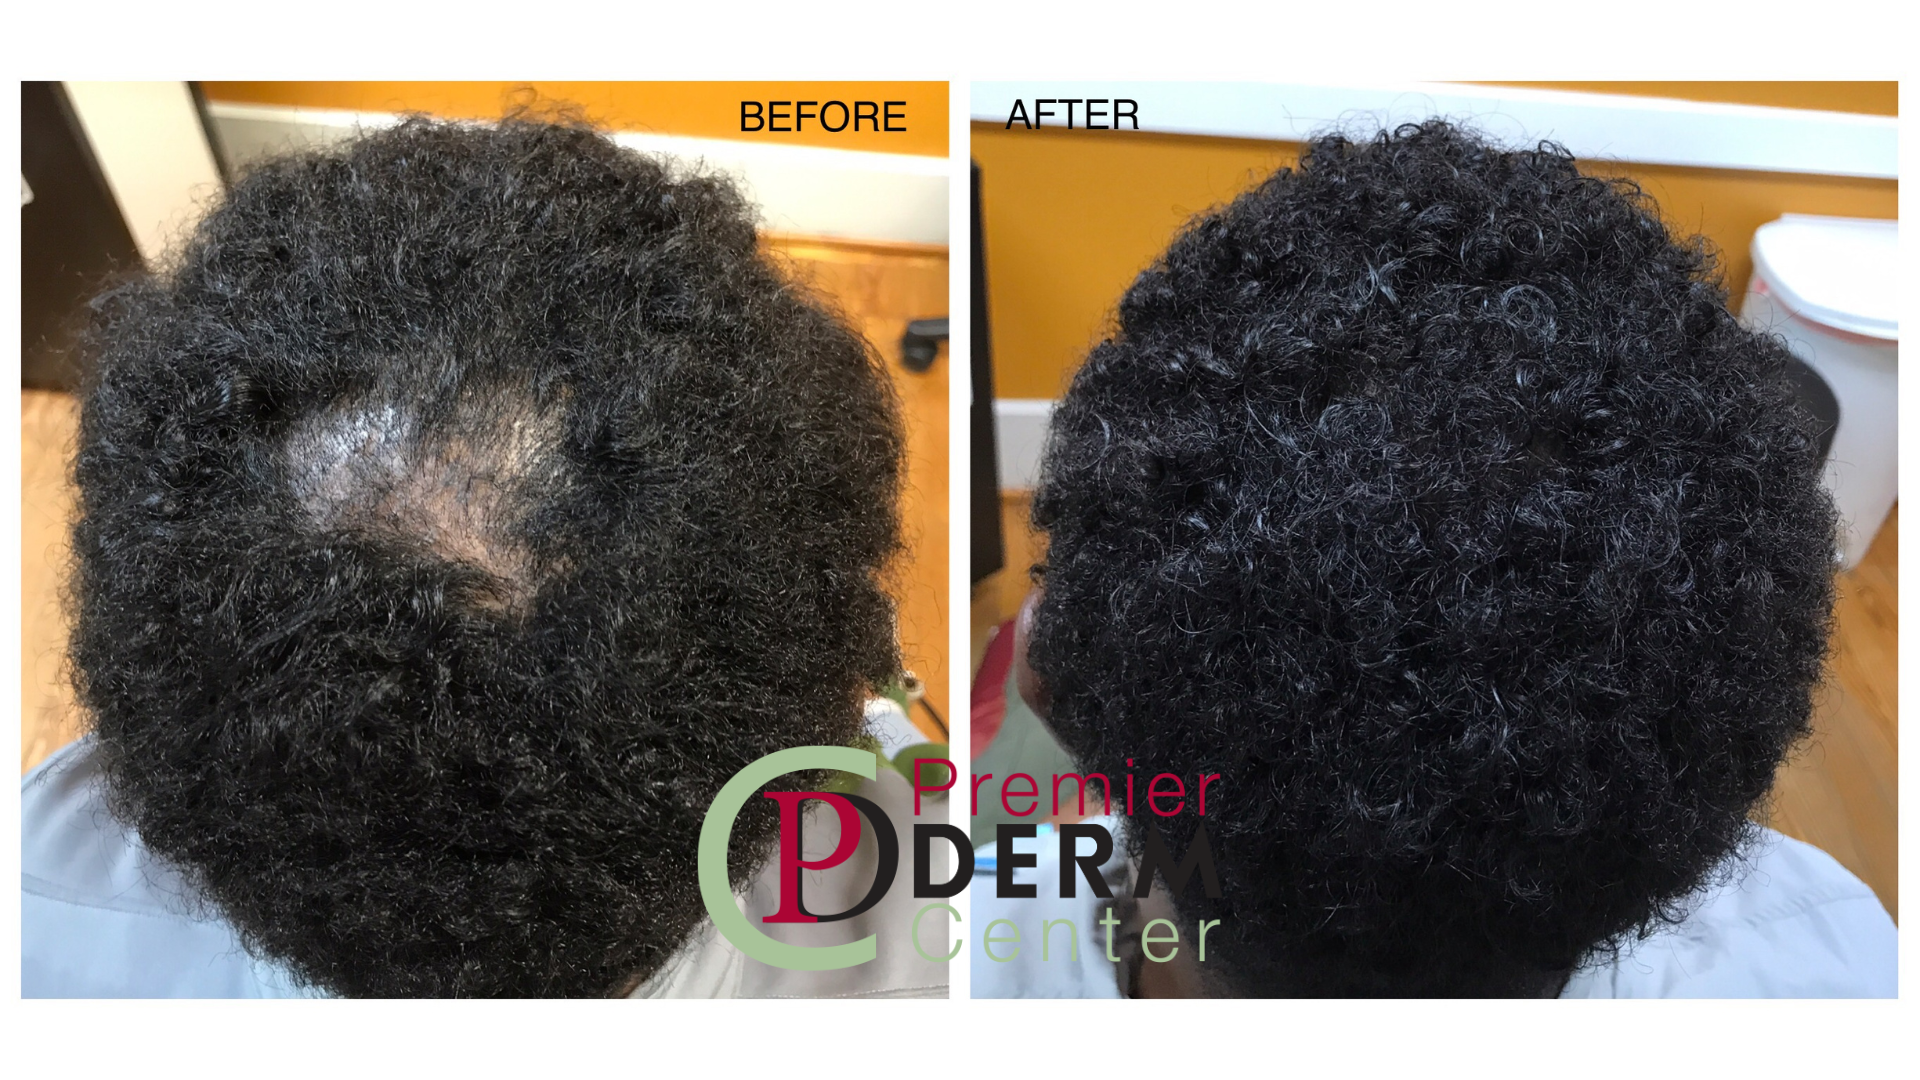 Platelet-Rich Plasma (PRP) Treatment for Hair Loss | Premier Derm Center -  Dermatologist in Houston Heights